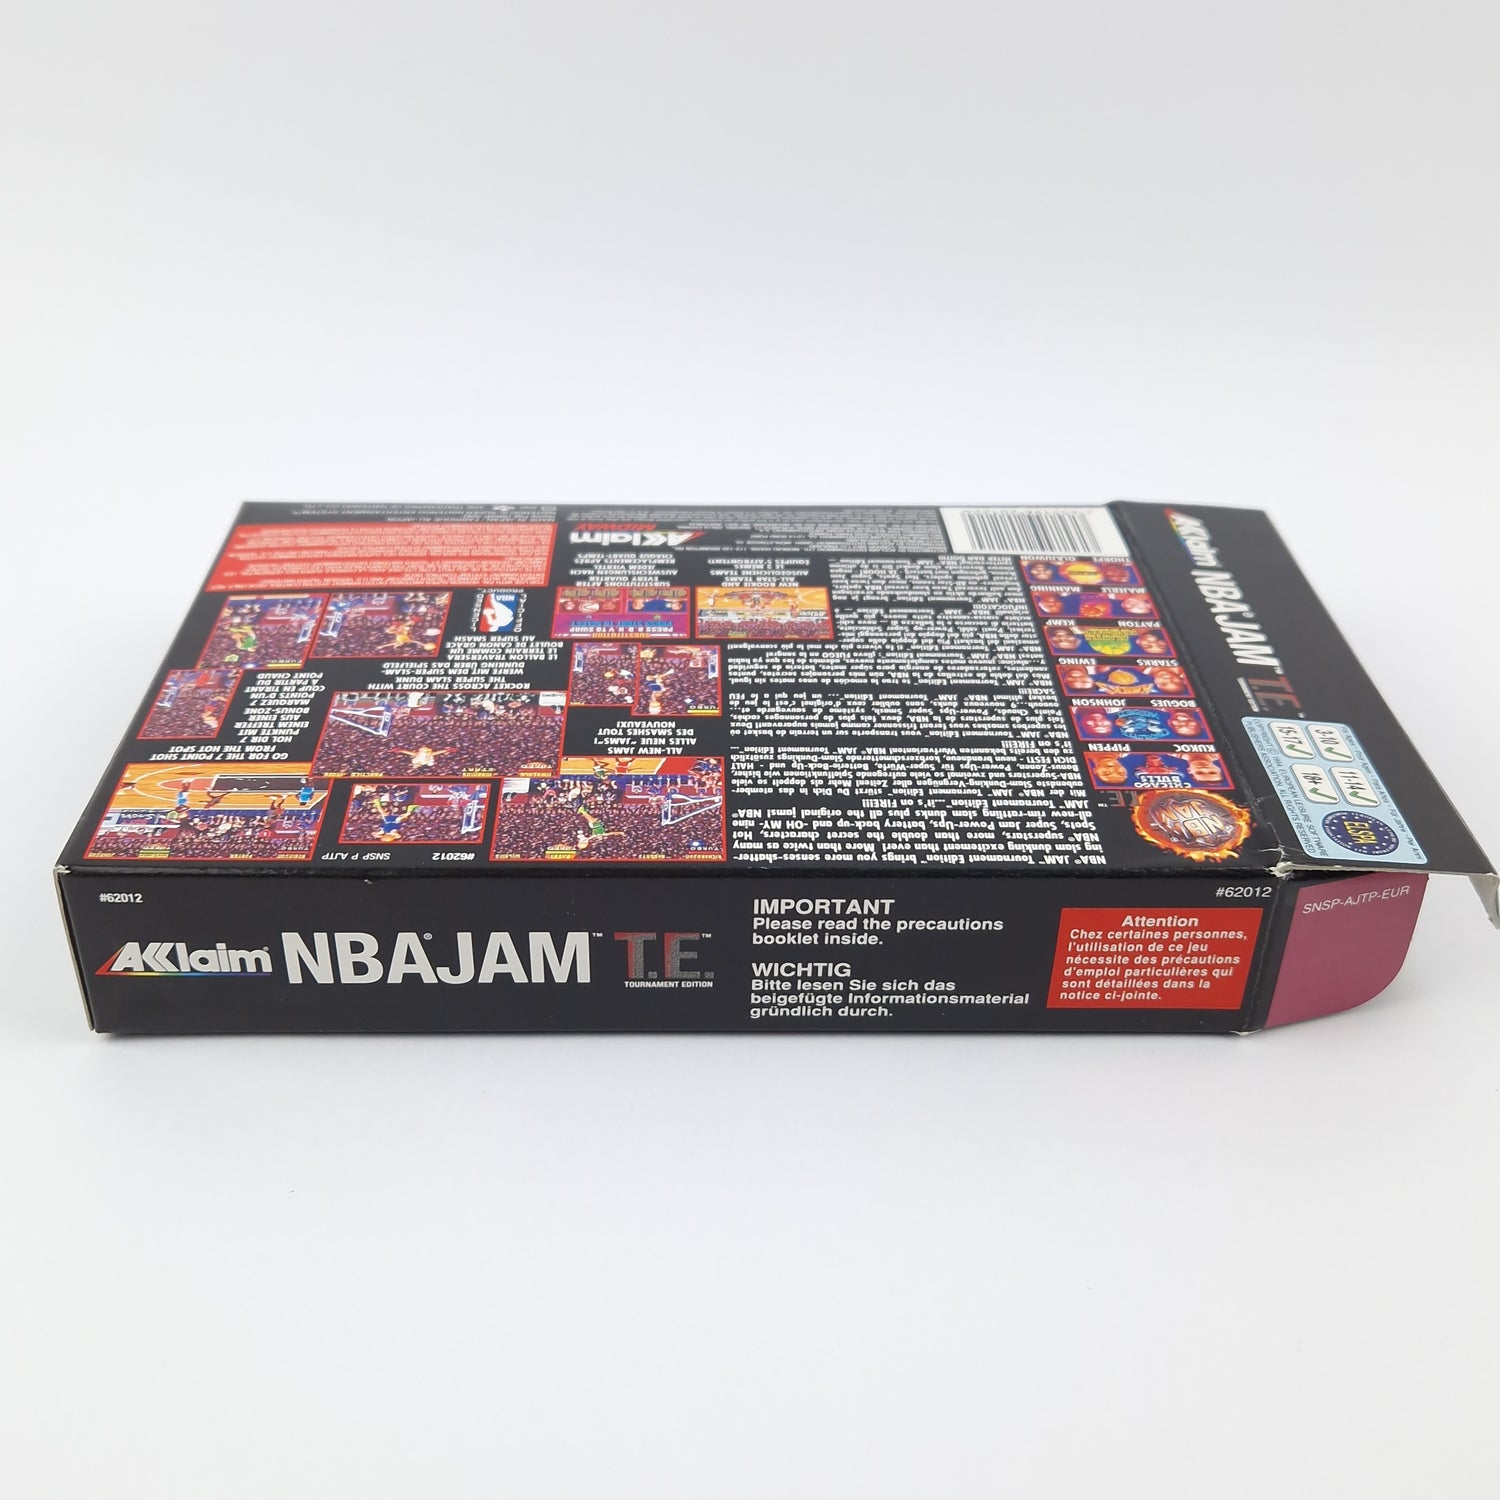 Super Nintendo Game: NBA JAM TE Tournament Edition - SNES cib OVP PAL EUR